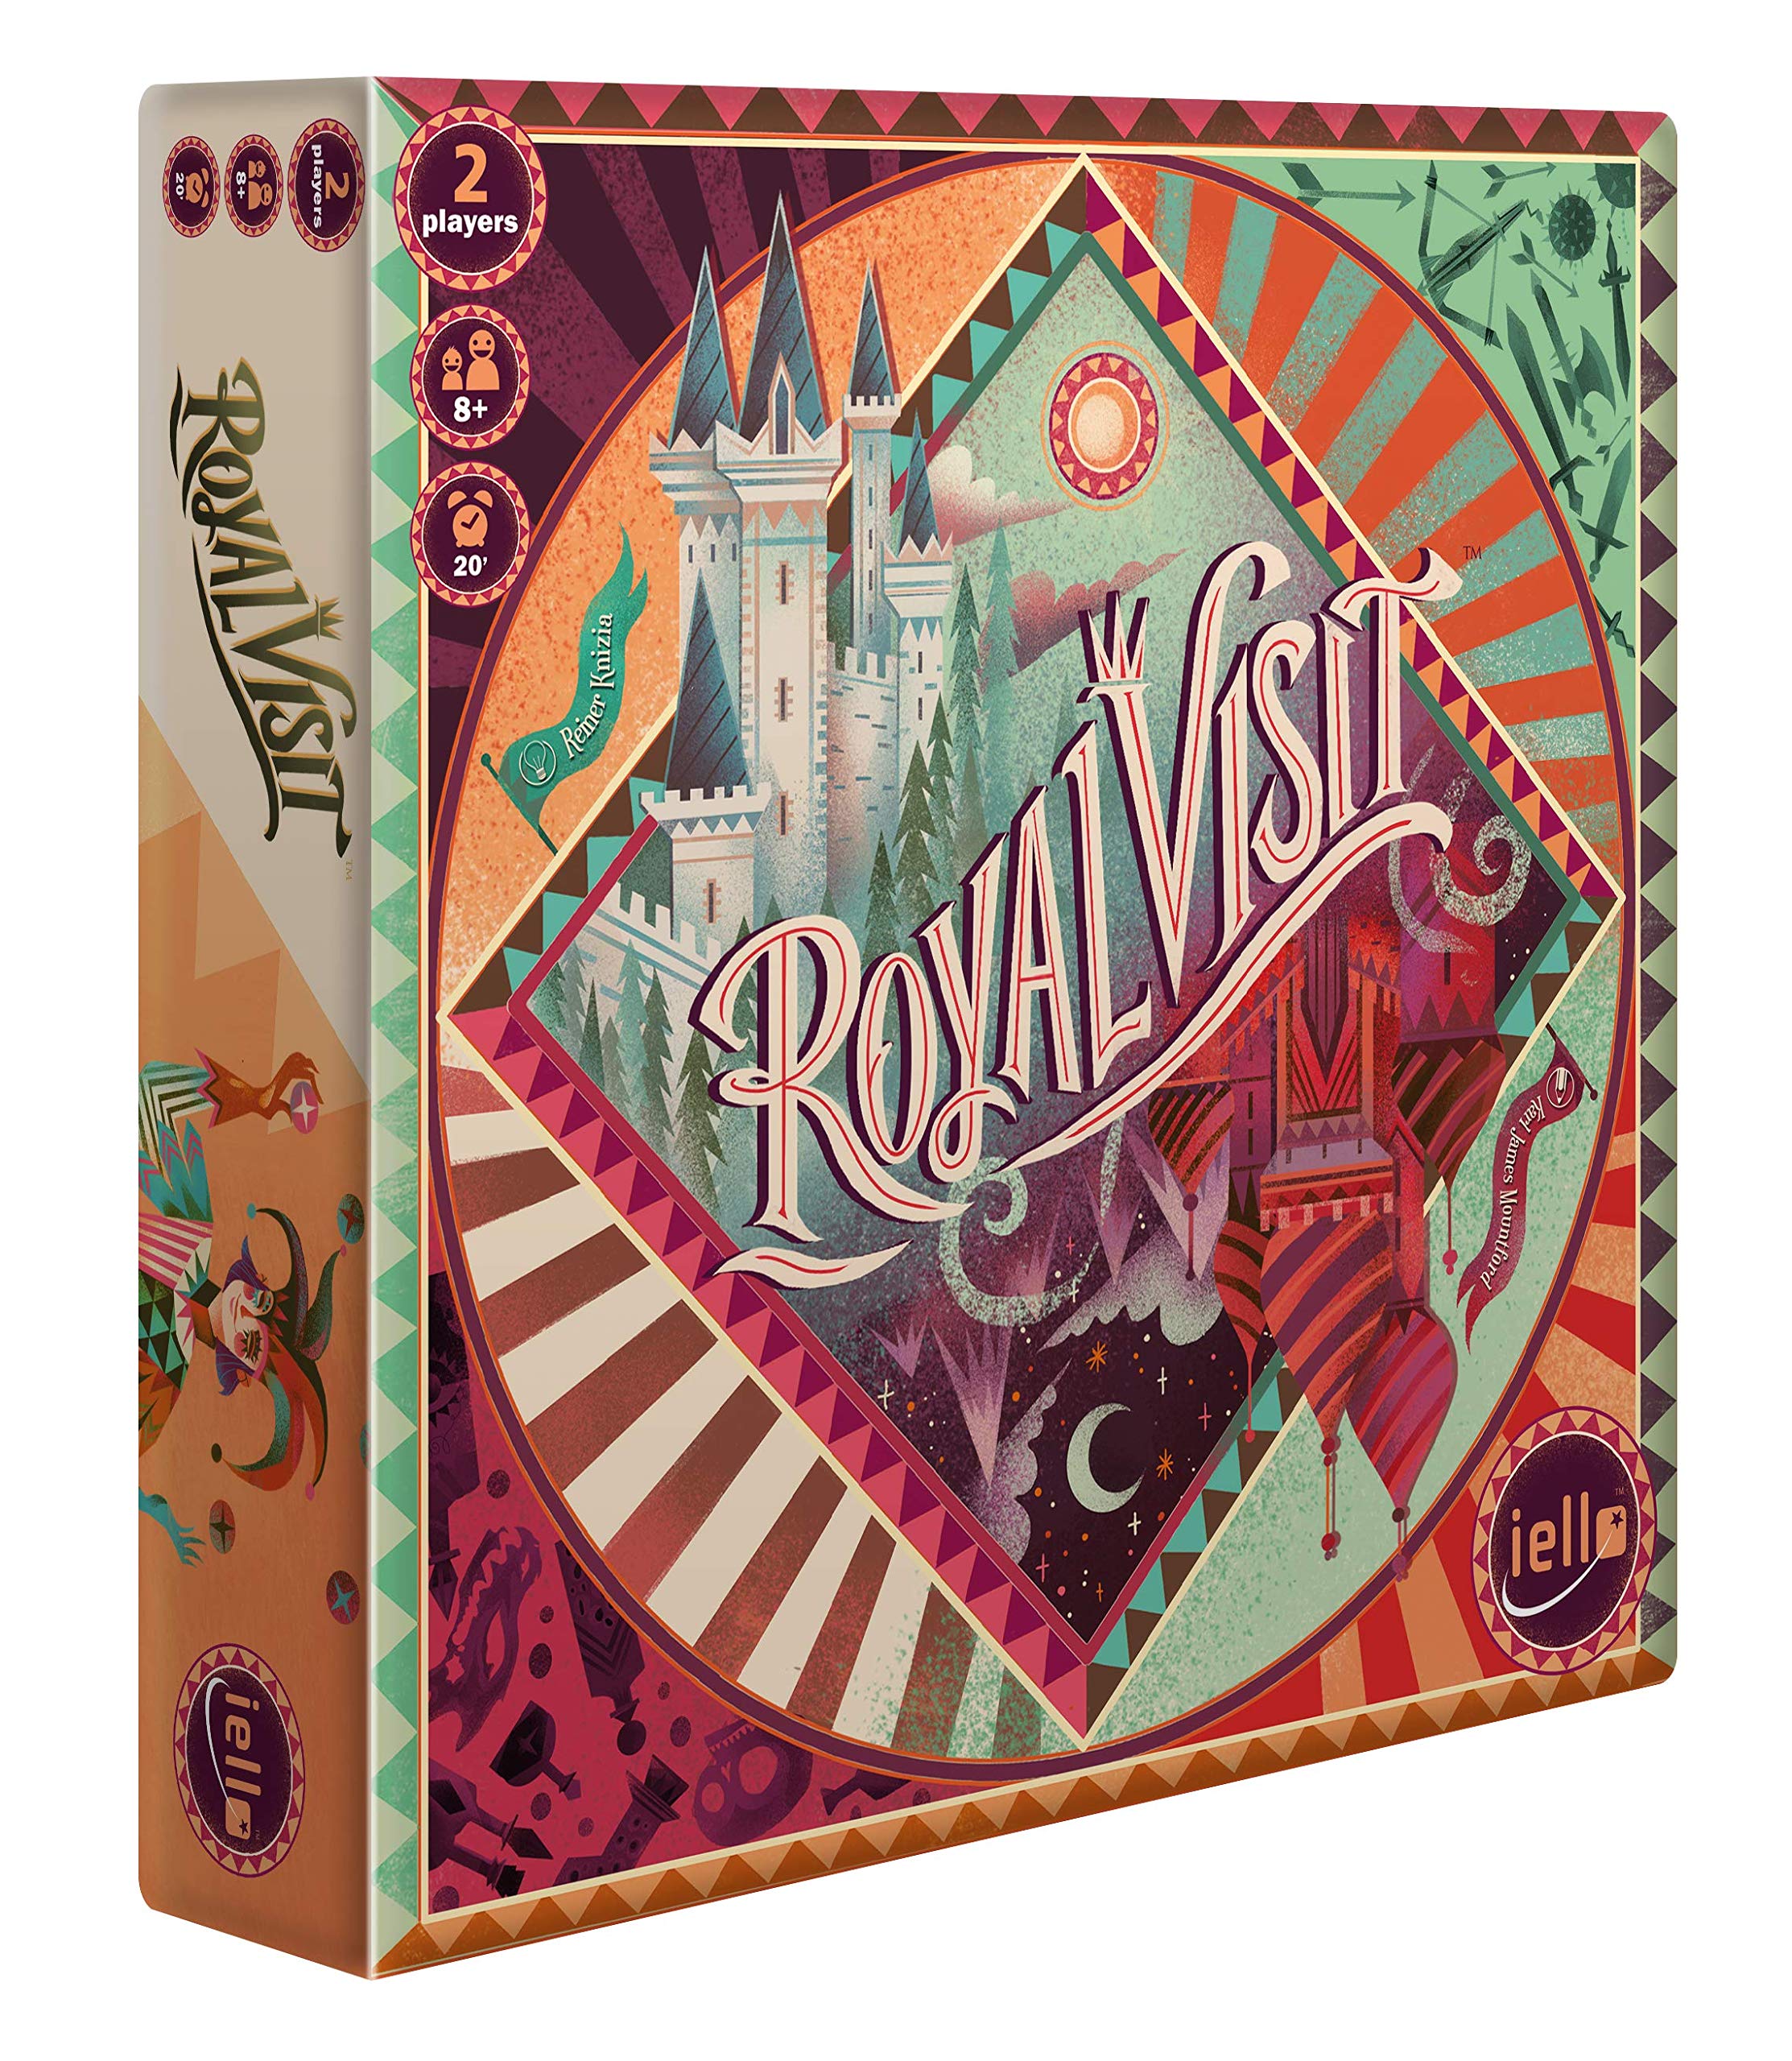 $16.99: IELLO: Royal Visit, Strategy Board Game